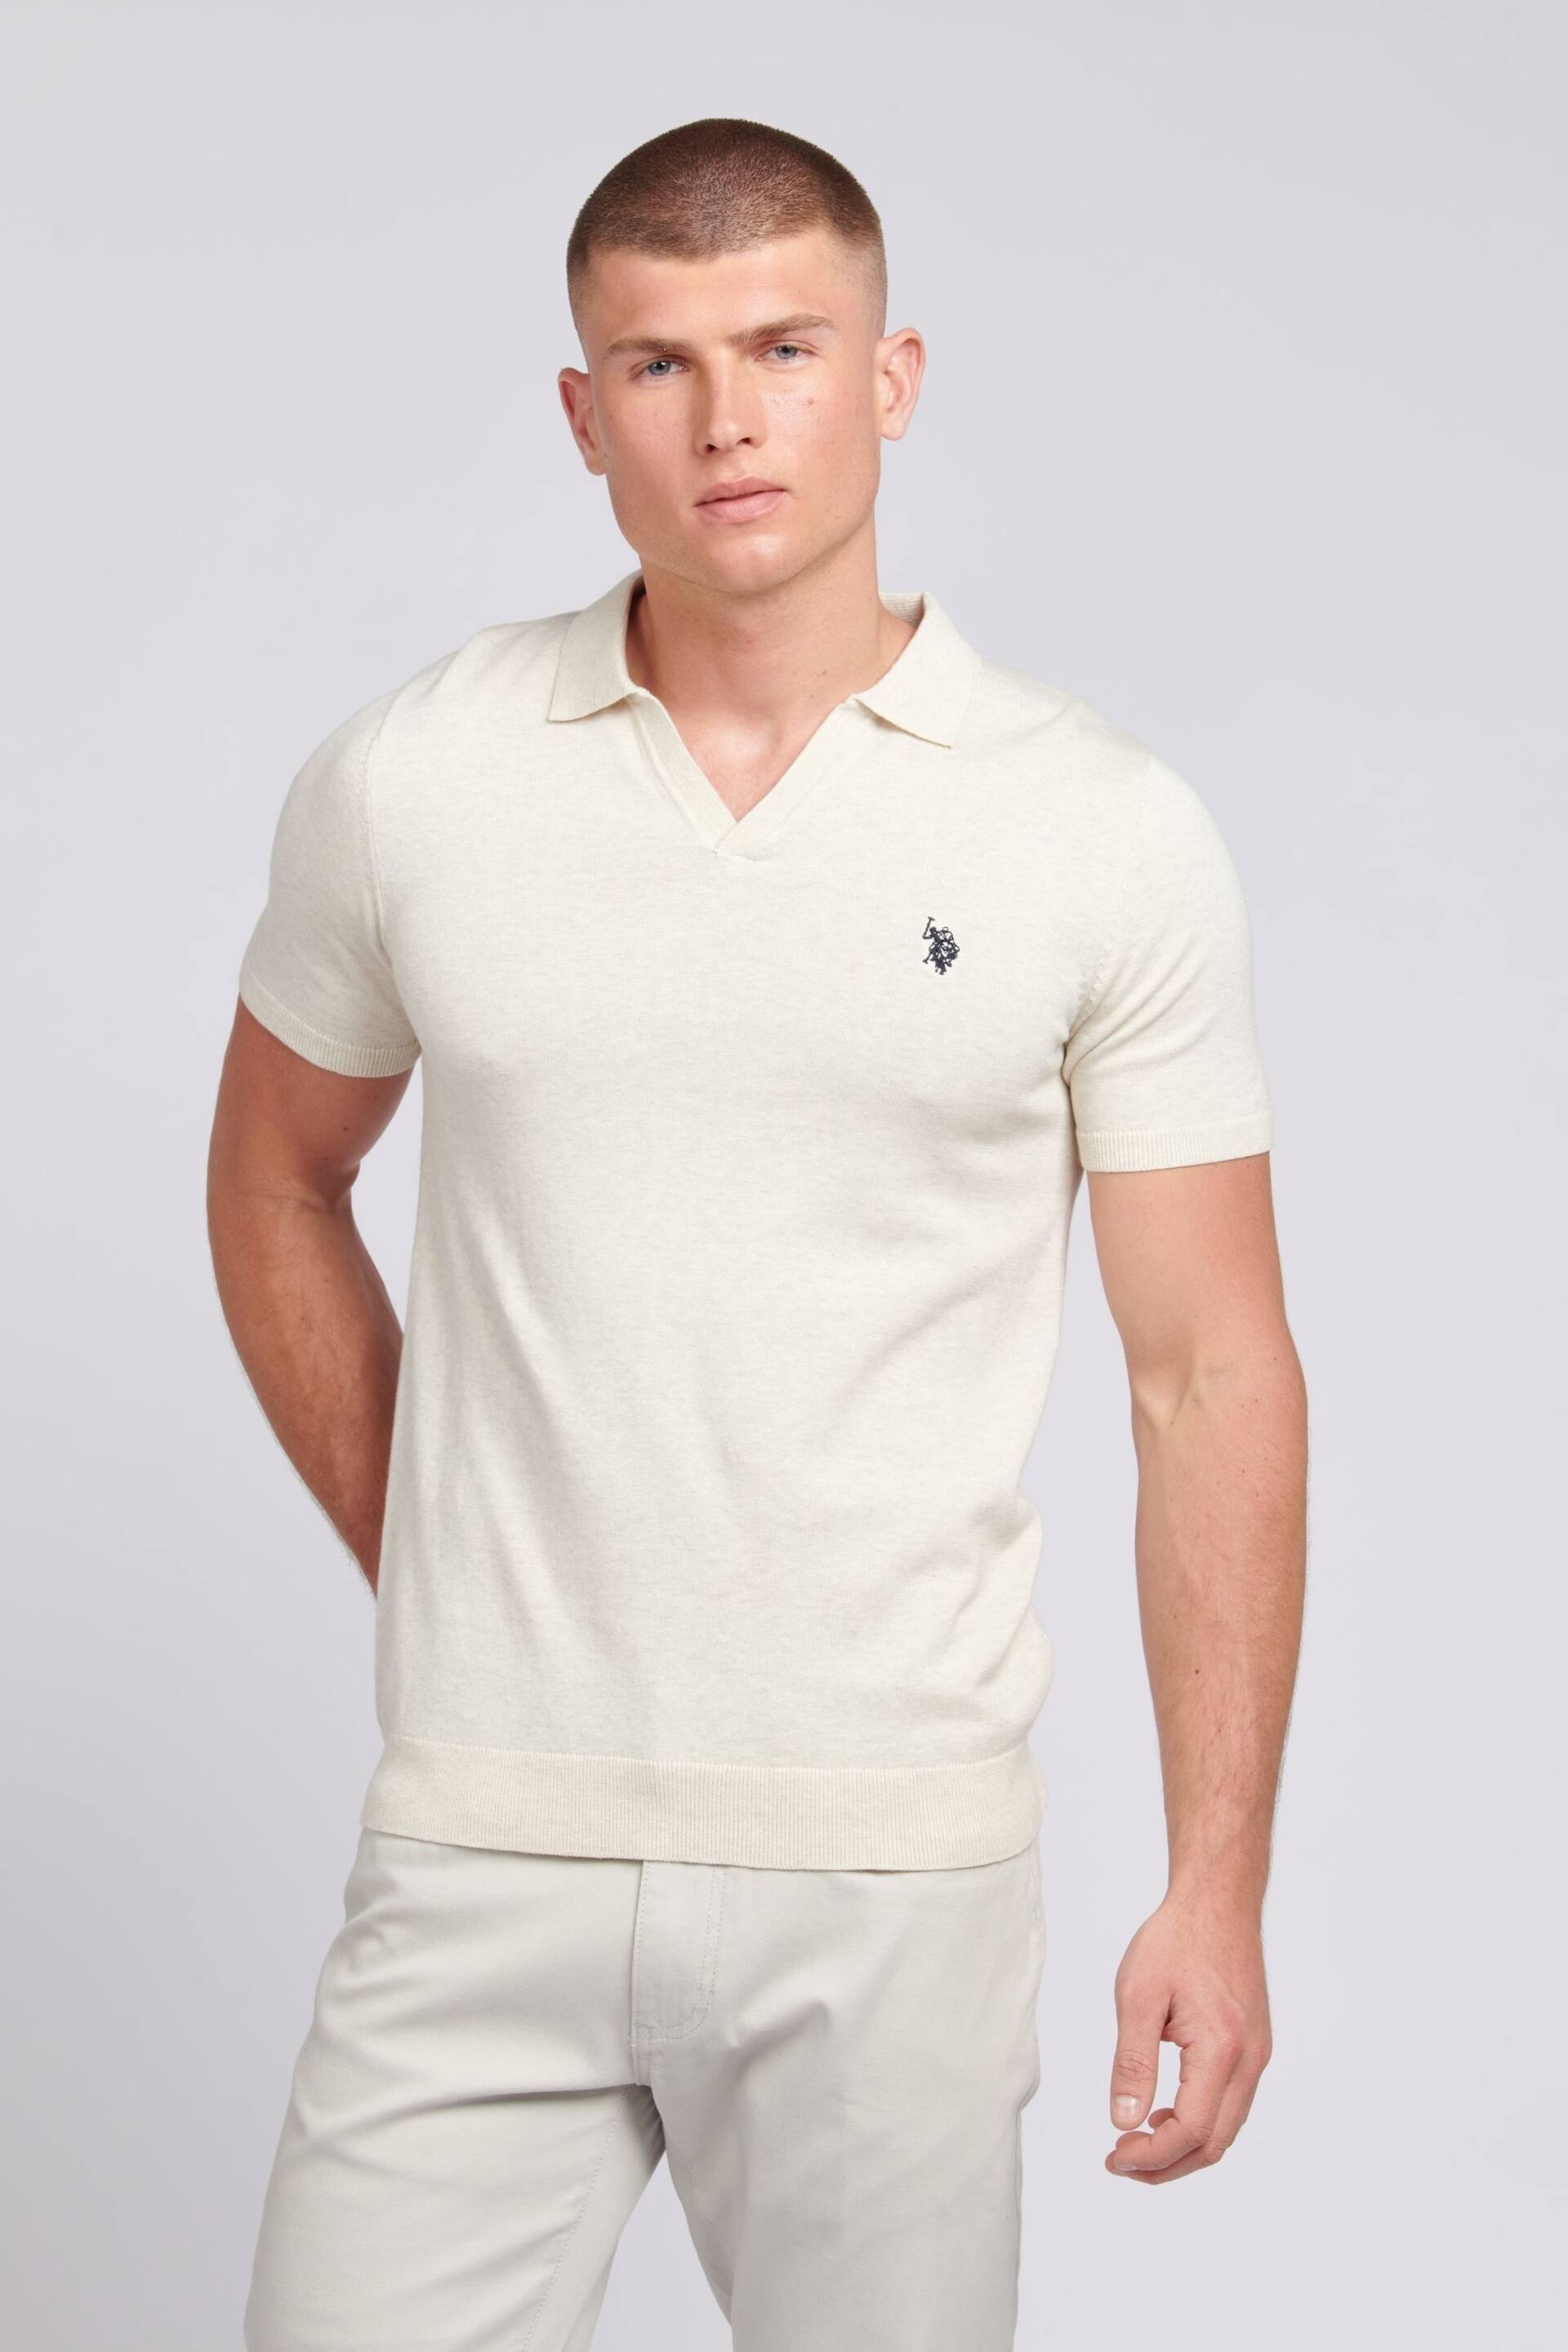 U.S. Polo Assn. Mens Regular Fit Combed Cotton Cream Polo Shirt - Image 1 of 4